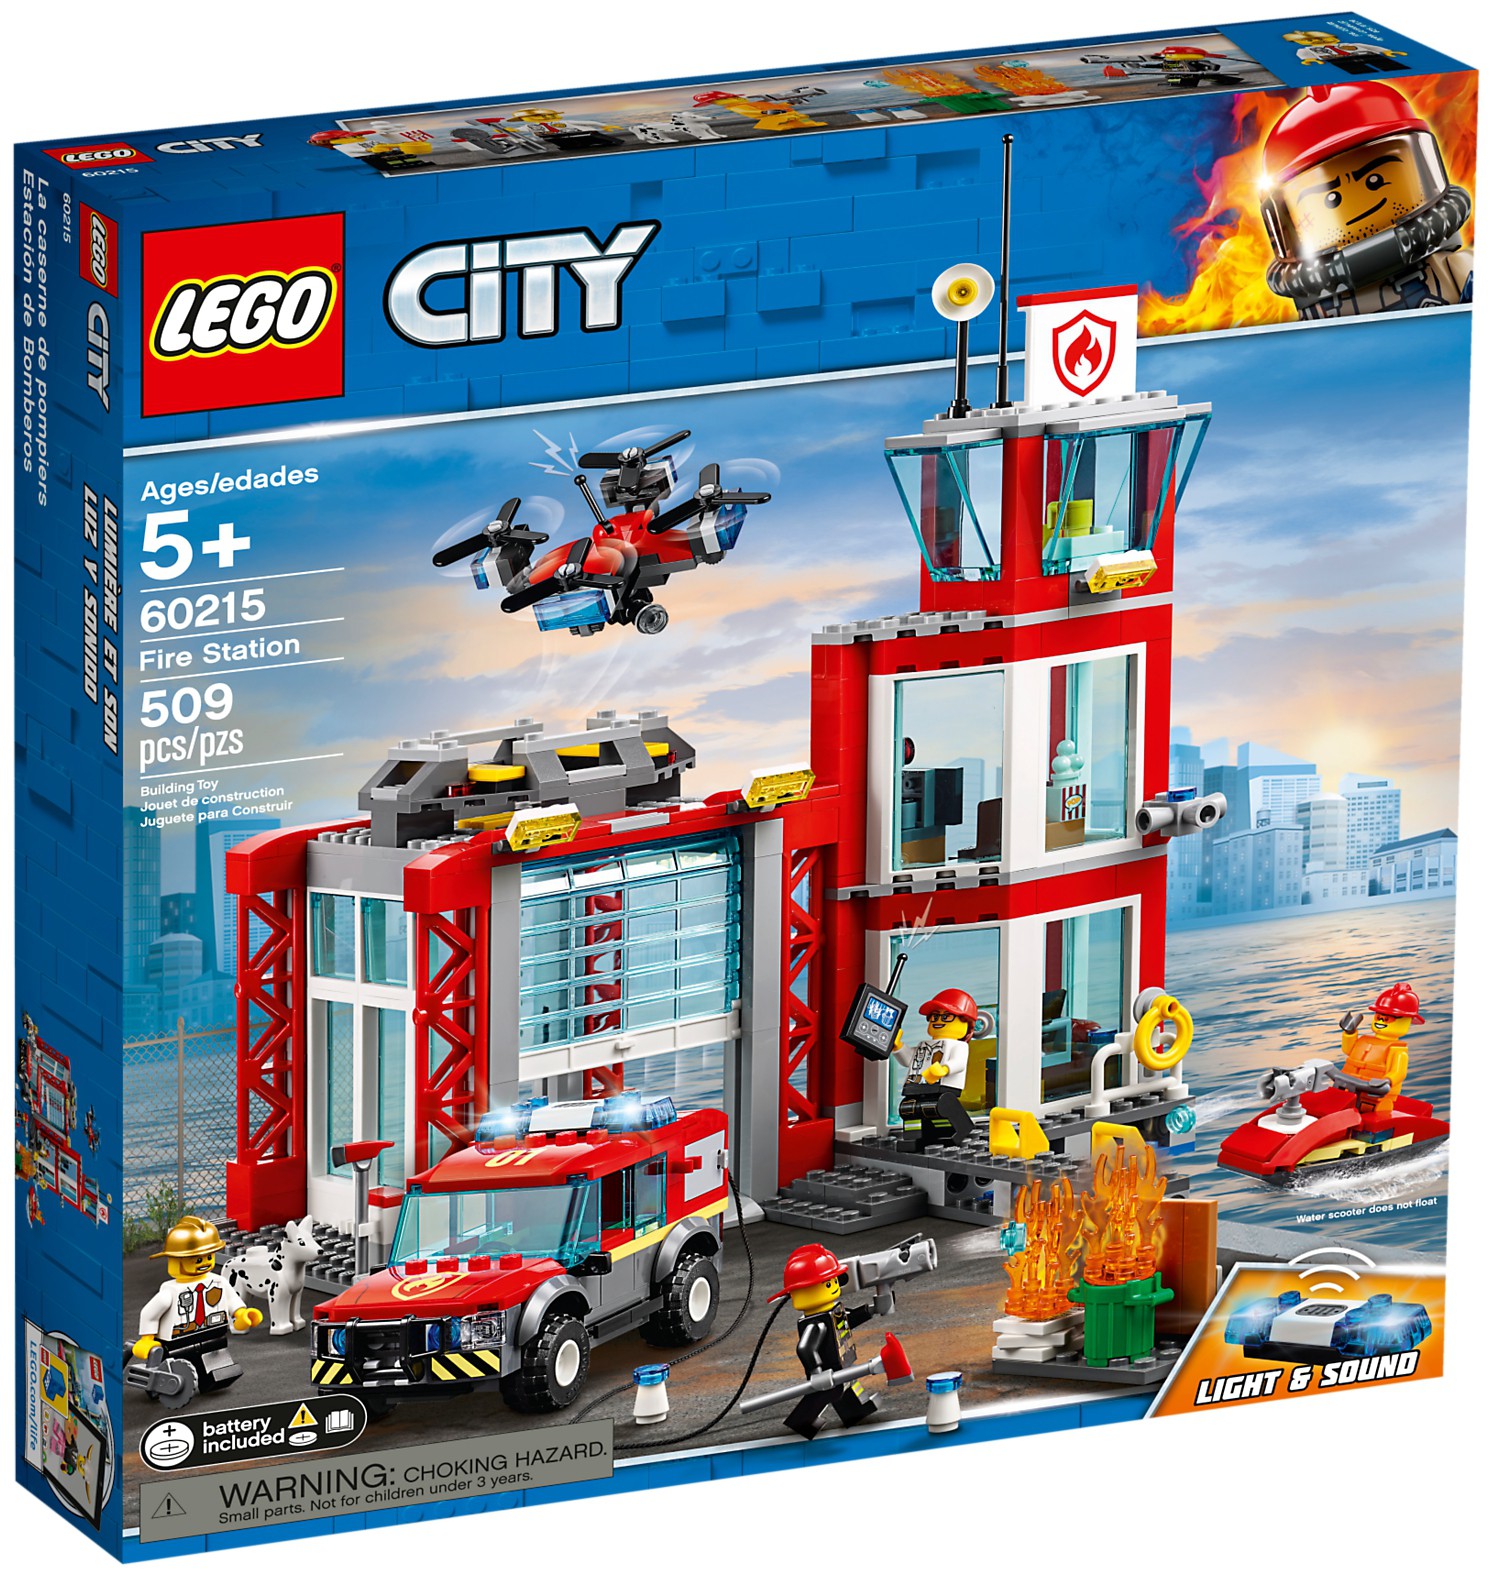 lego city 2019 fire sets